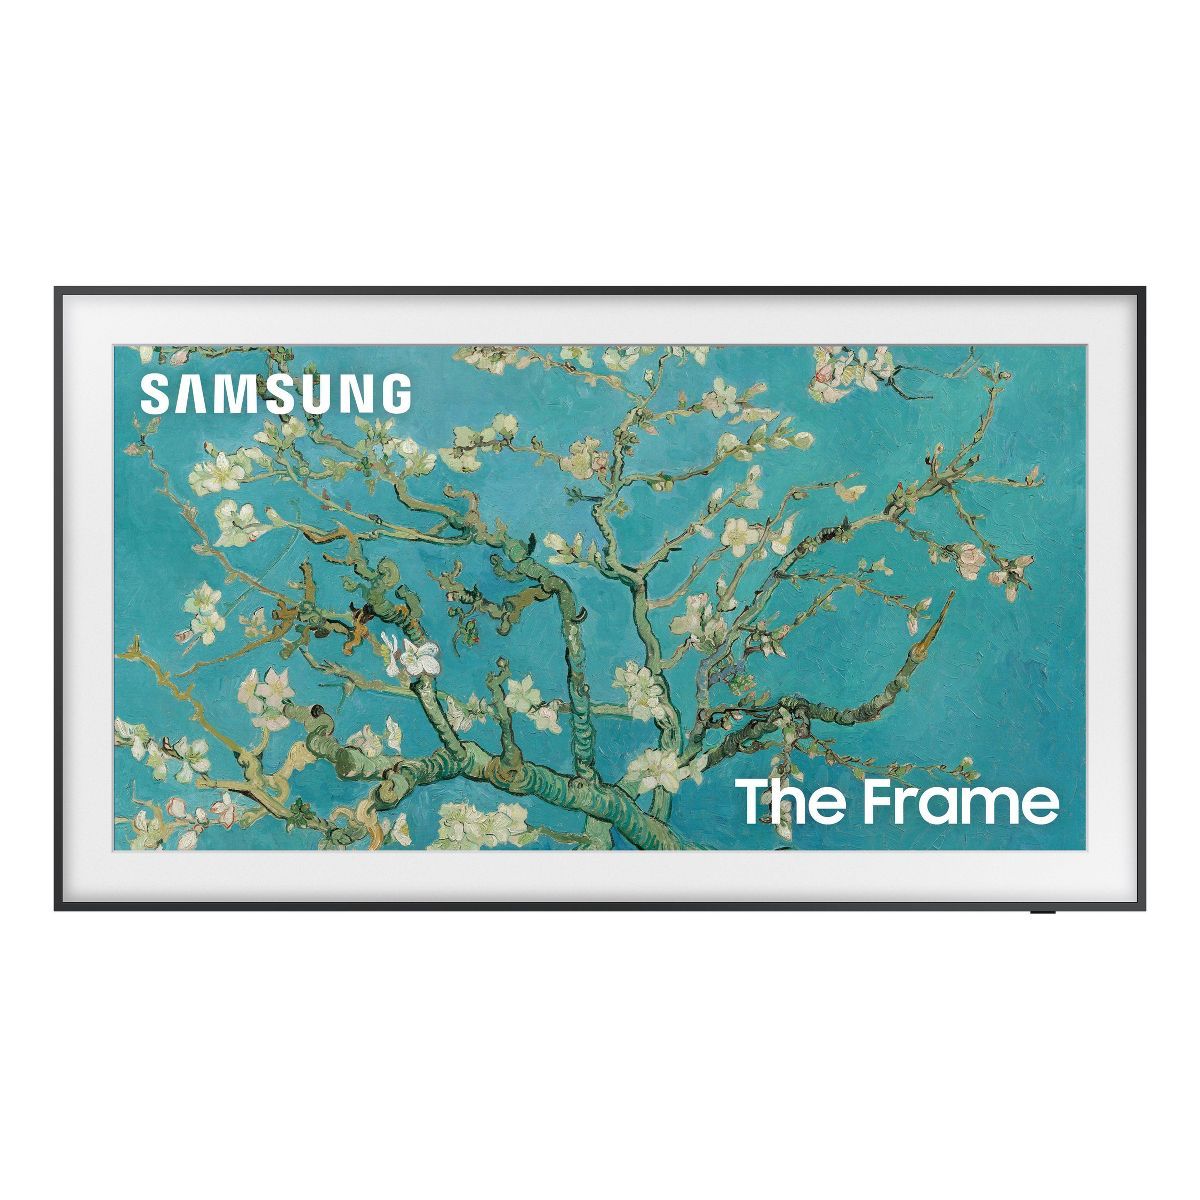 Samsung 32" The Frame 1080p FHD Smart TV - Black (QN32LS03C) | Target